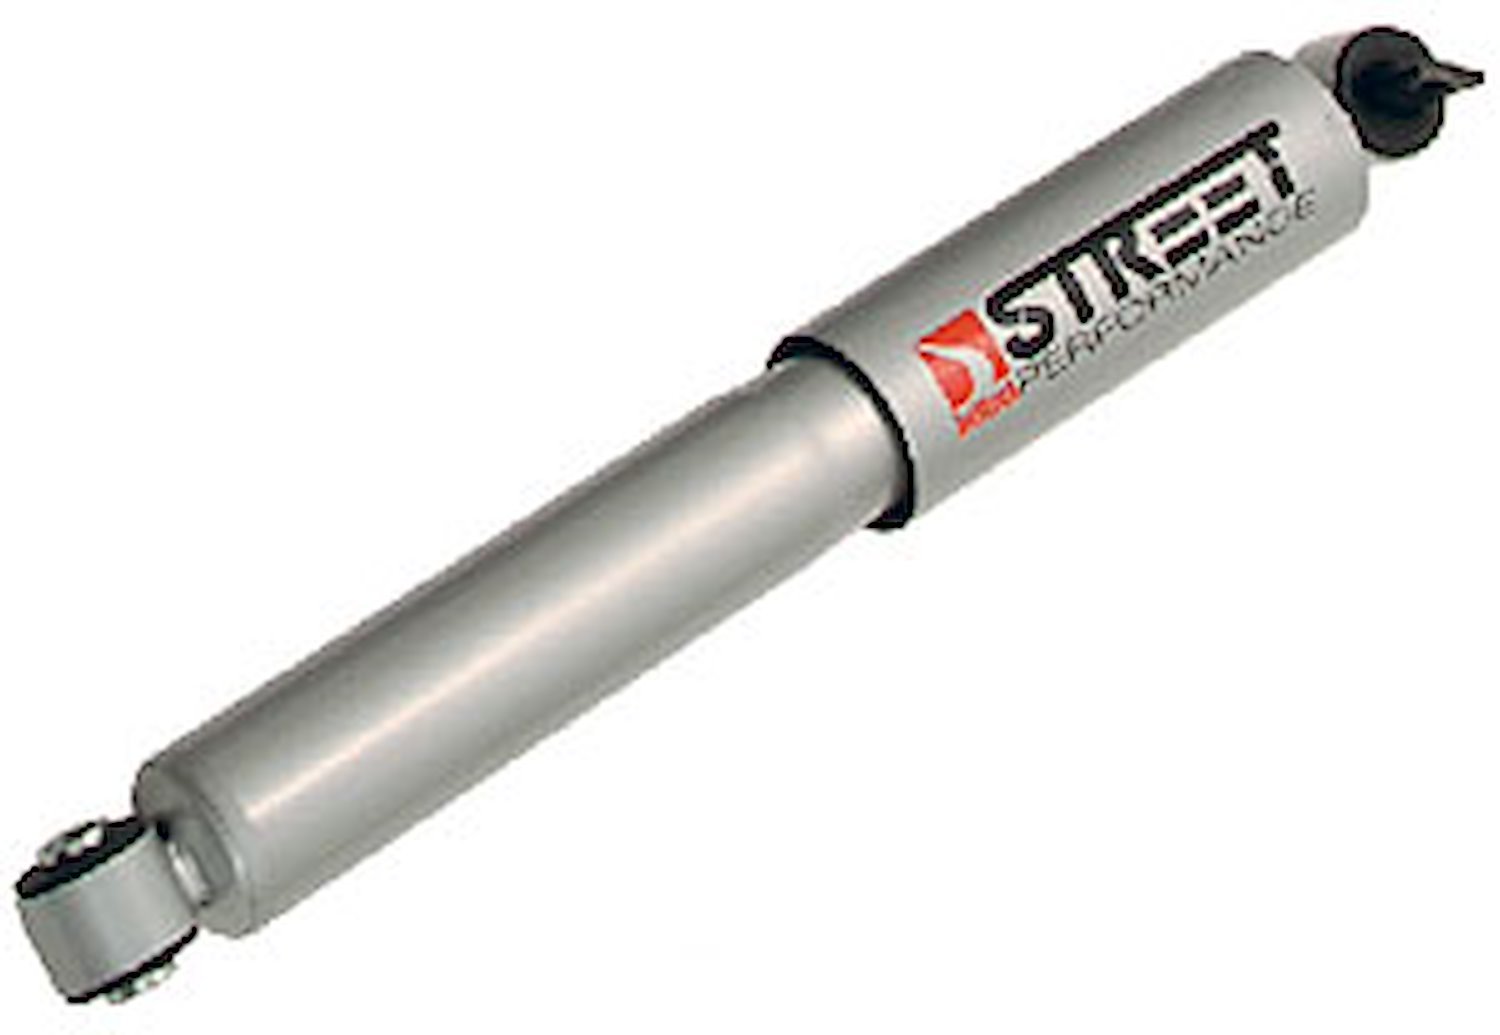 Street Performance Shock includes (1) 146-2310FL Rear Shock